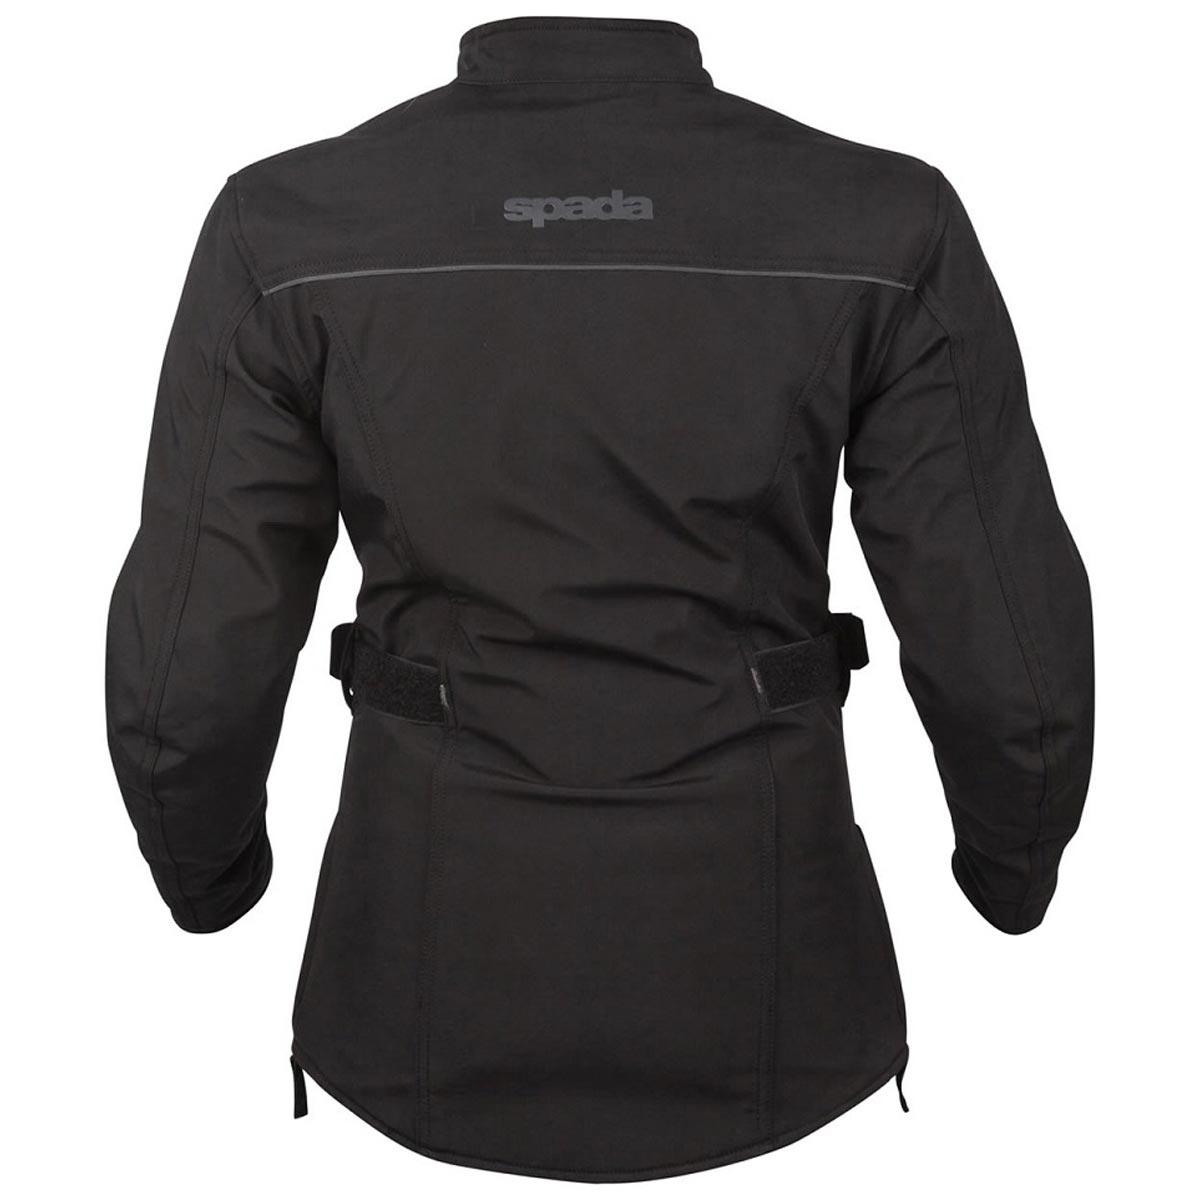 Spada Hairpin Jacket CE Ladies WP Black - Motorcycle Clothing